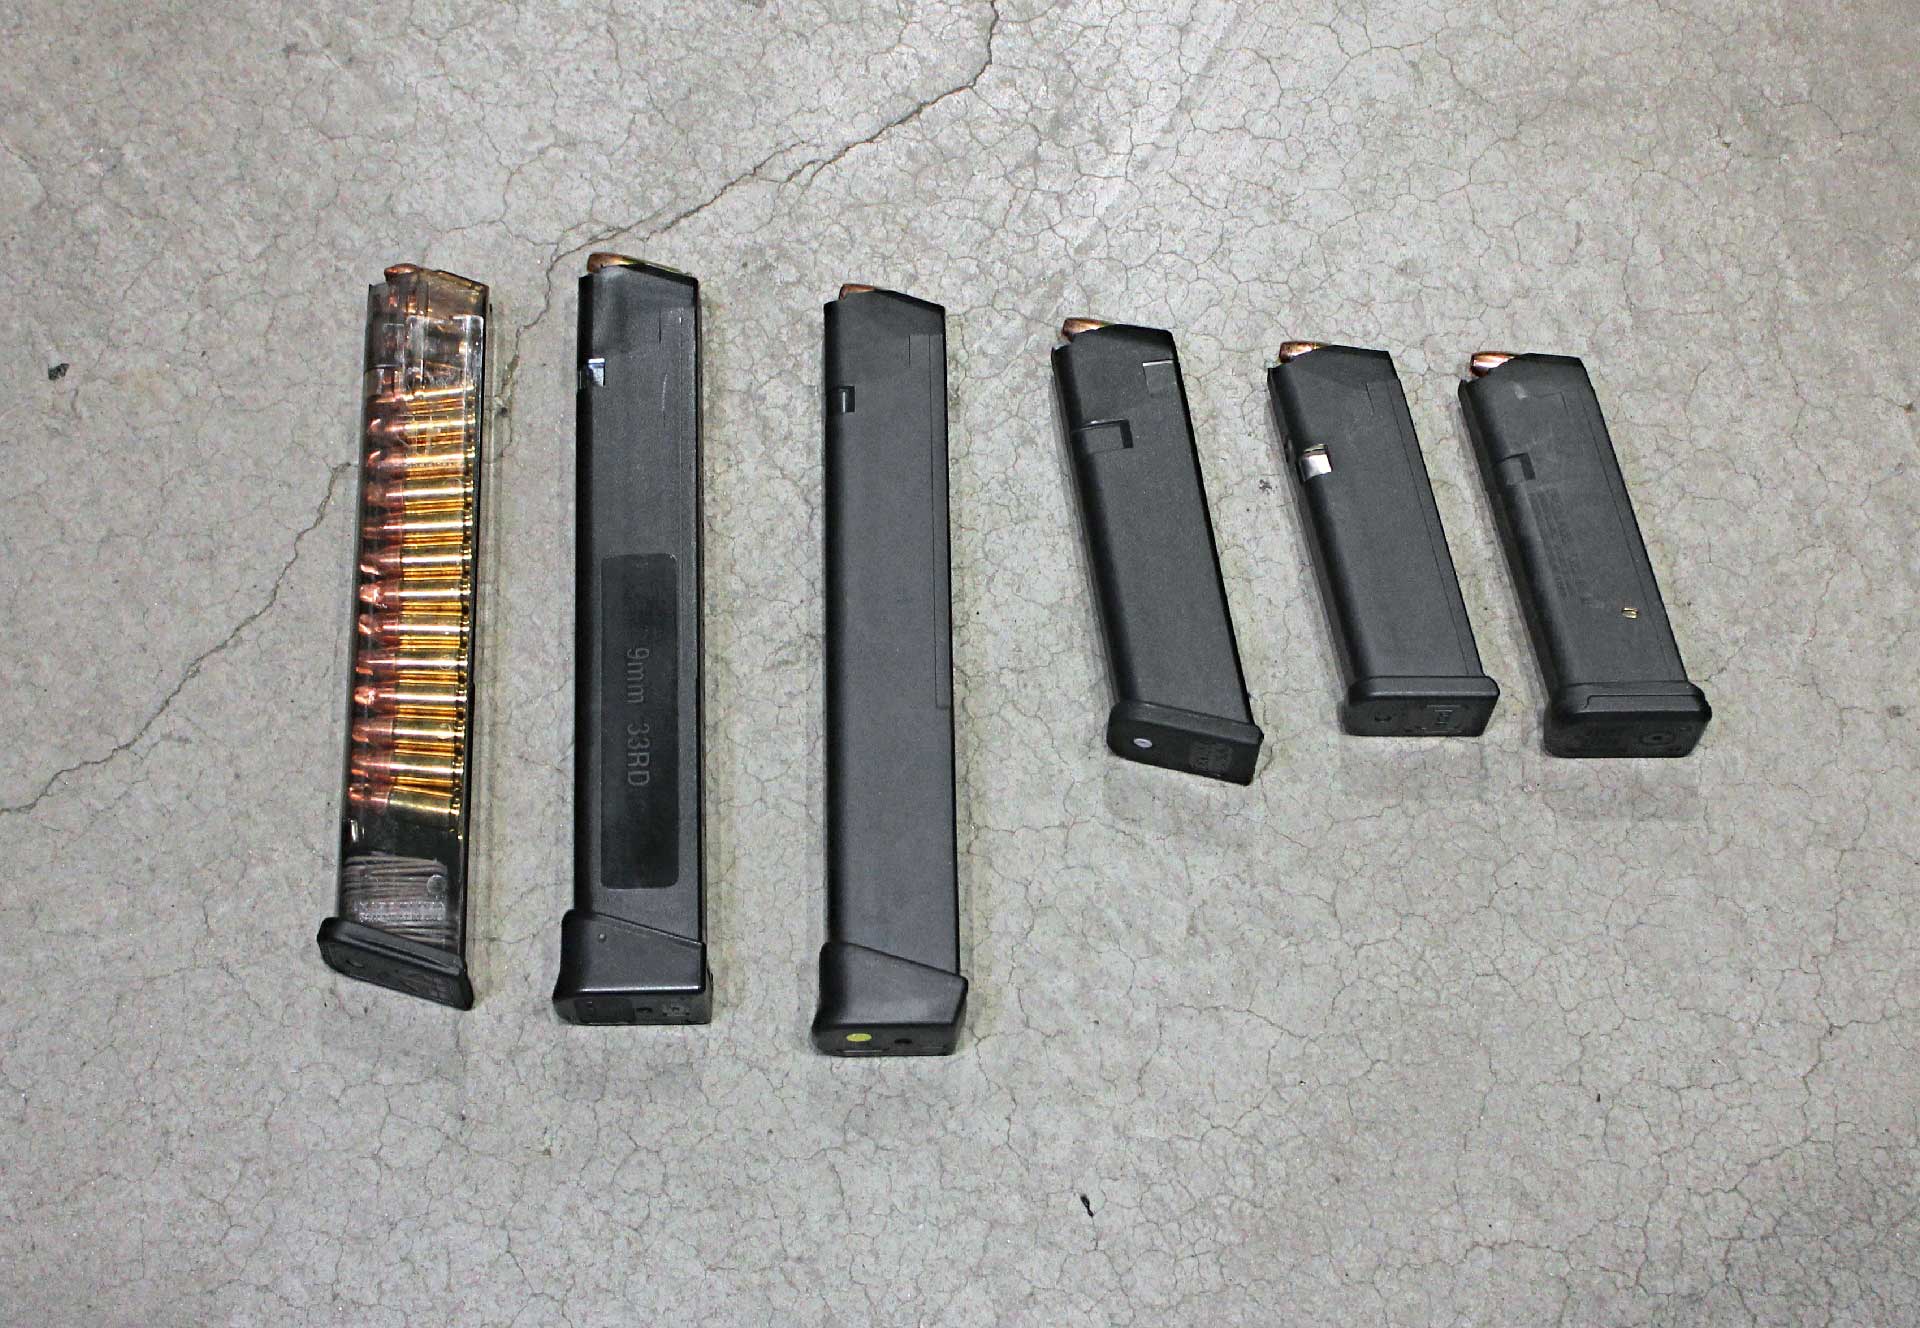 A selection of Glock-compatible handgun magazines shown on a concrete floor.